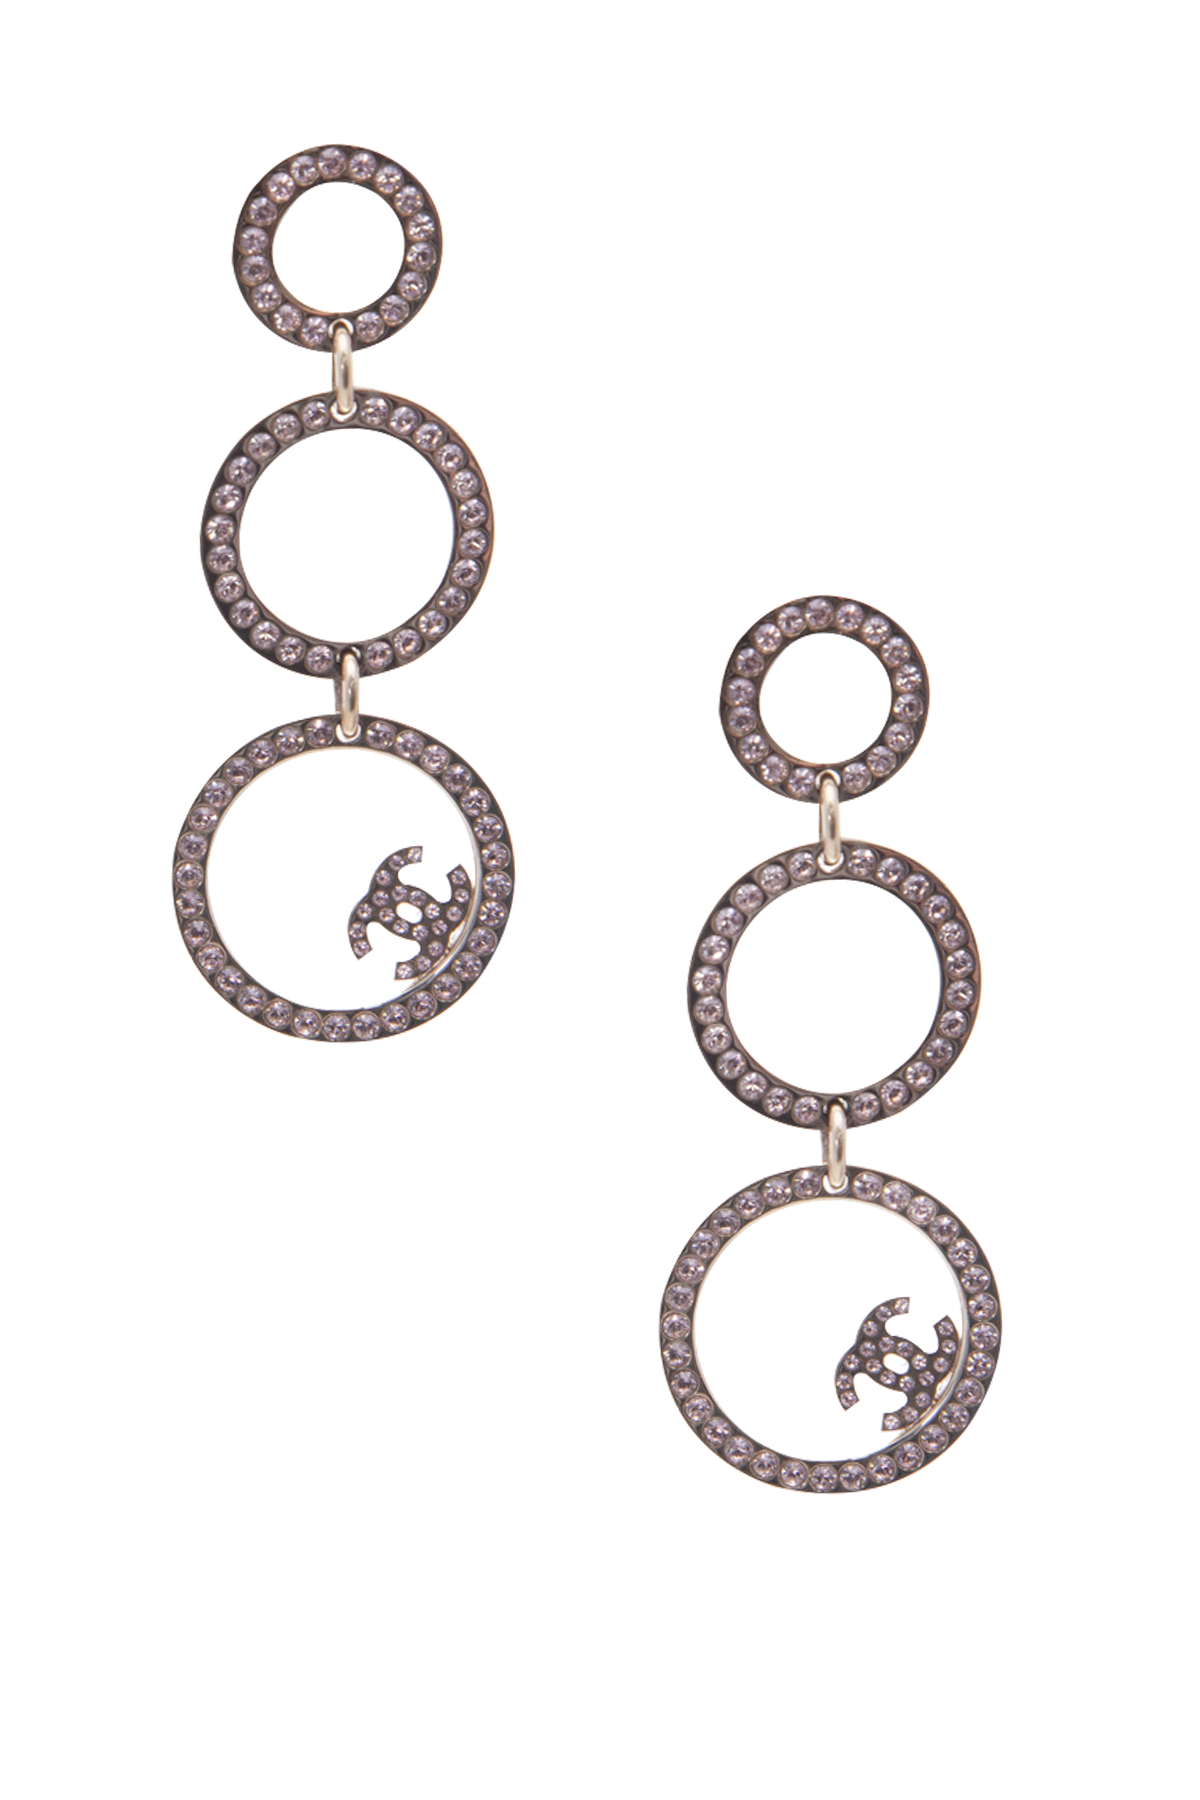 Chanel CC Circle Drop Earrings